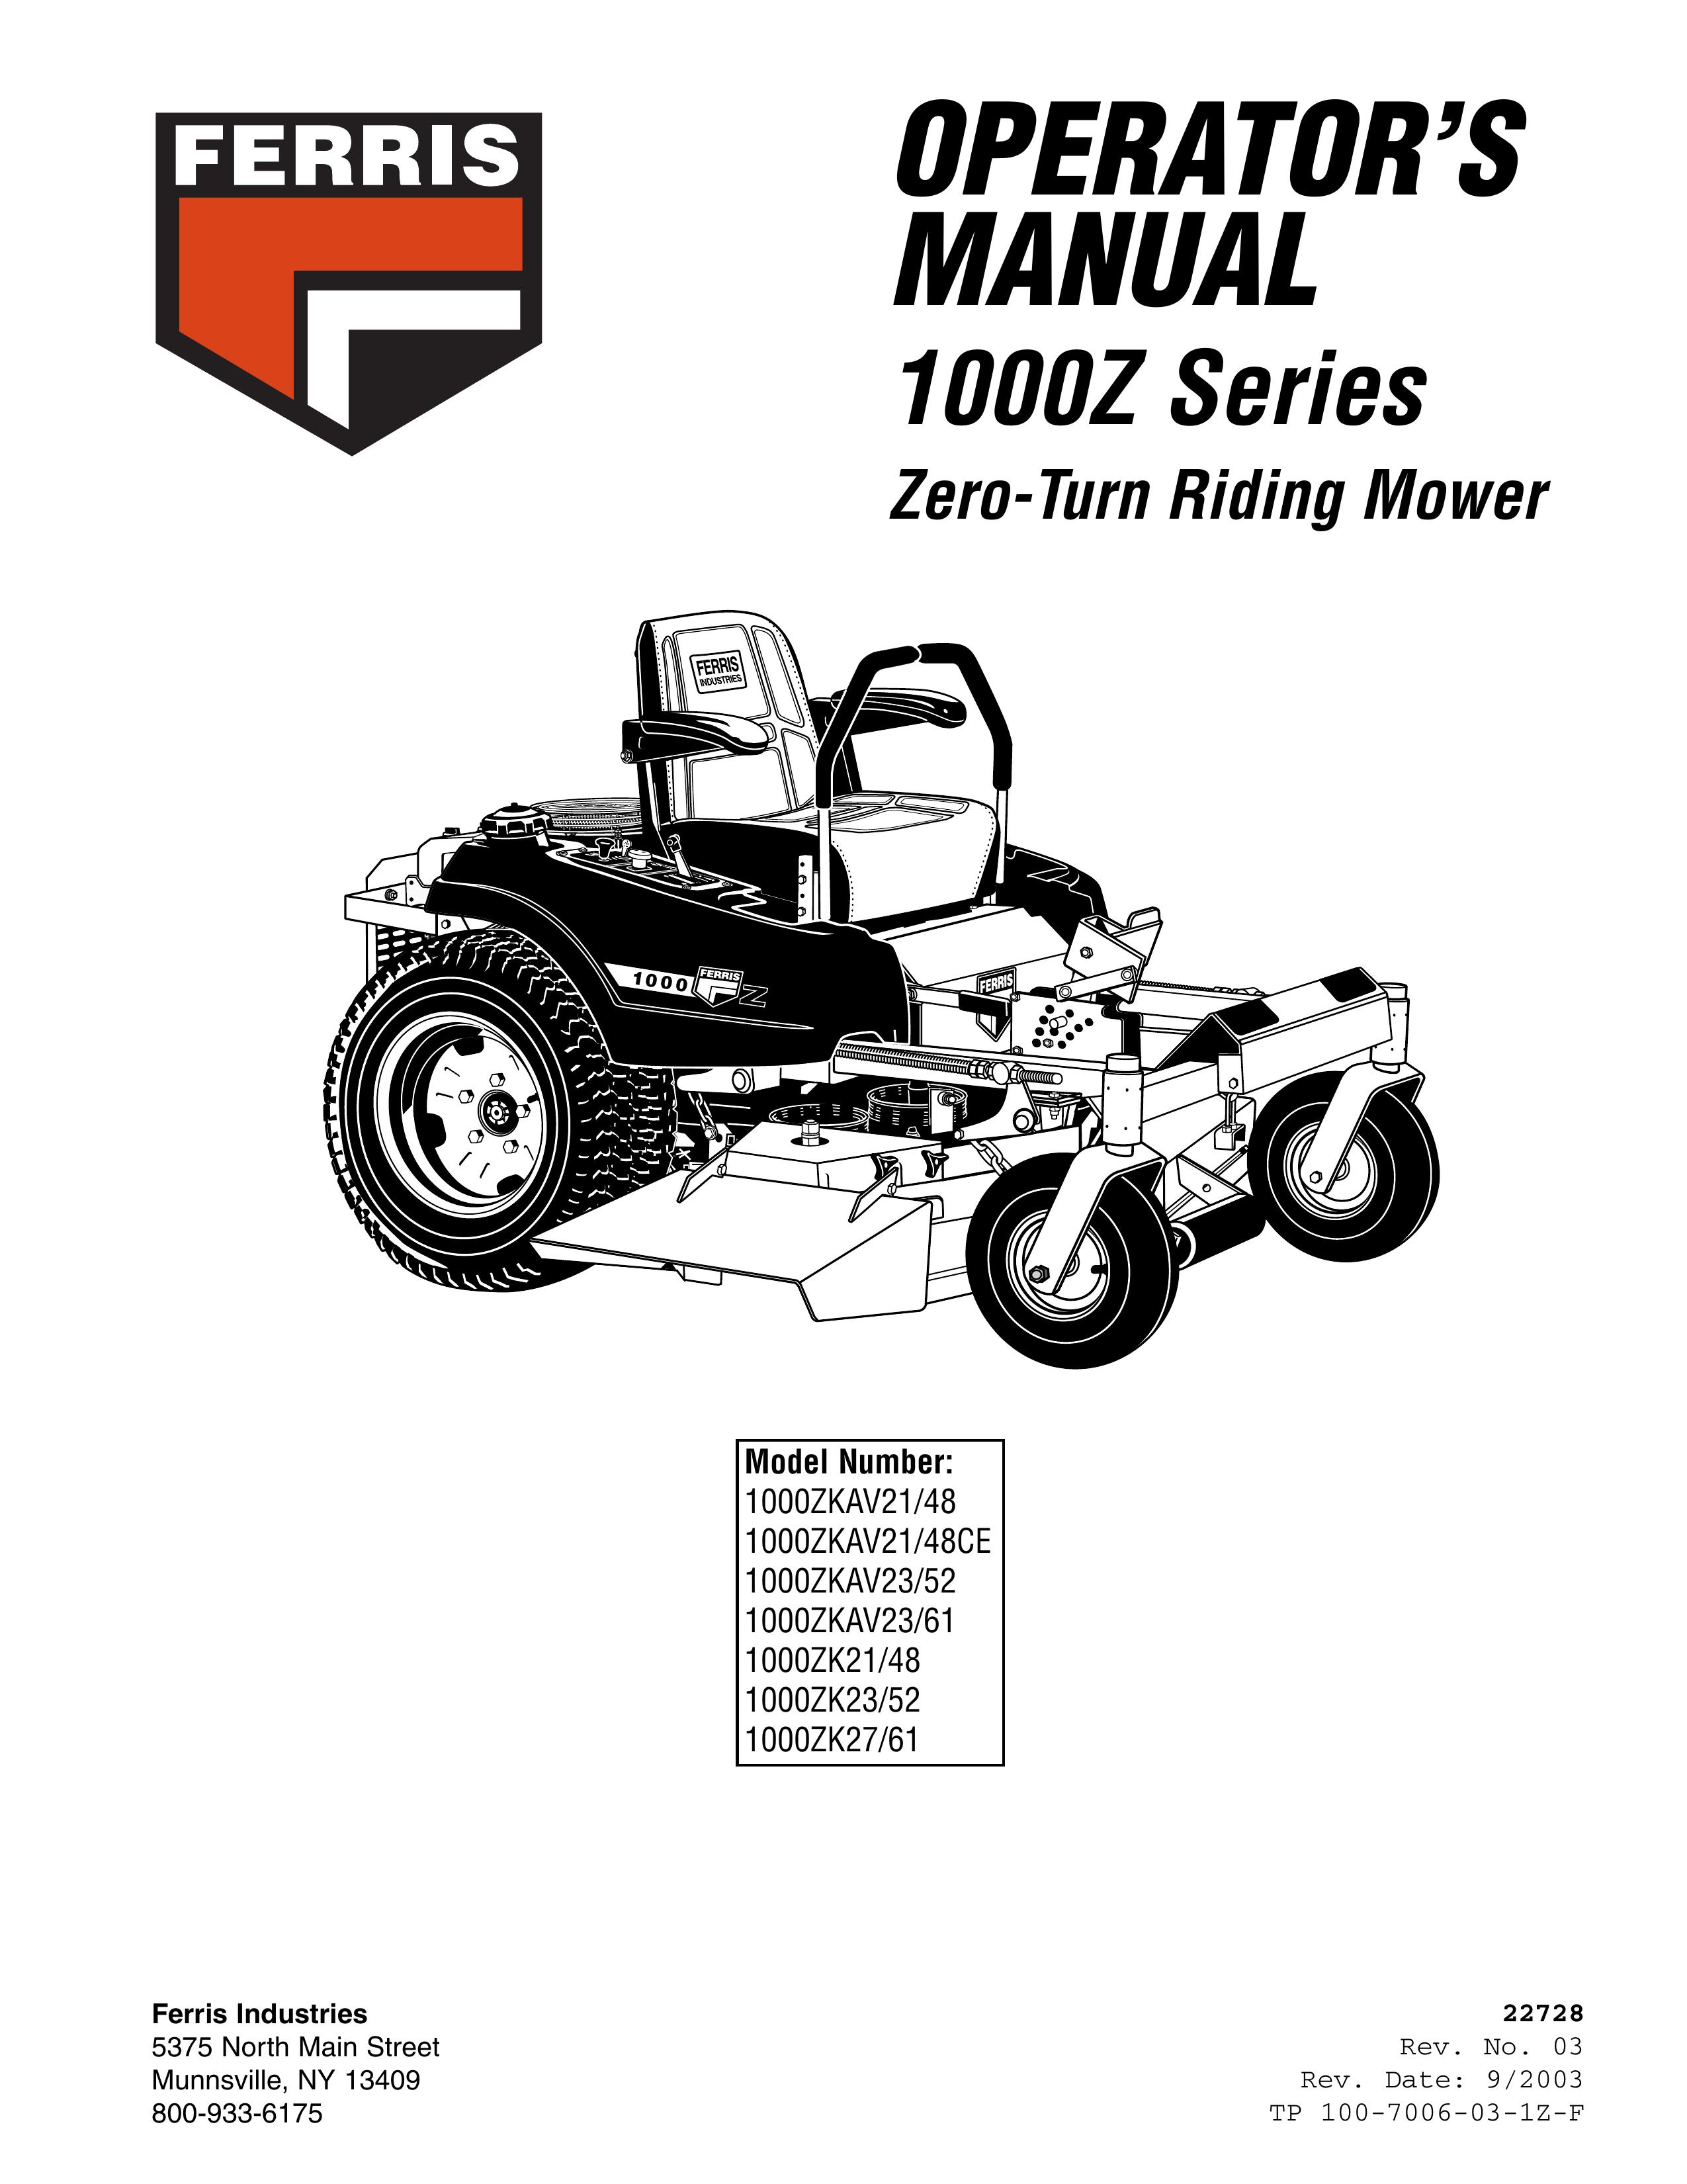 Ferris Industries 1000ZK23/52 Lawn Mower User Manual